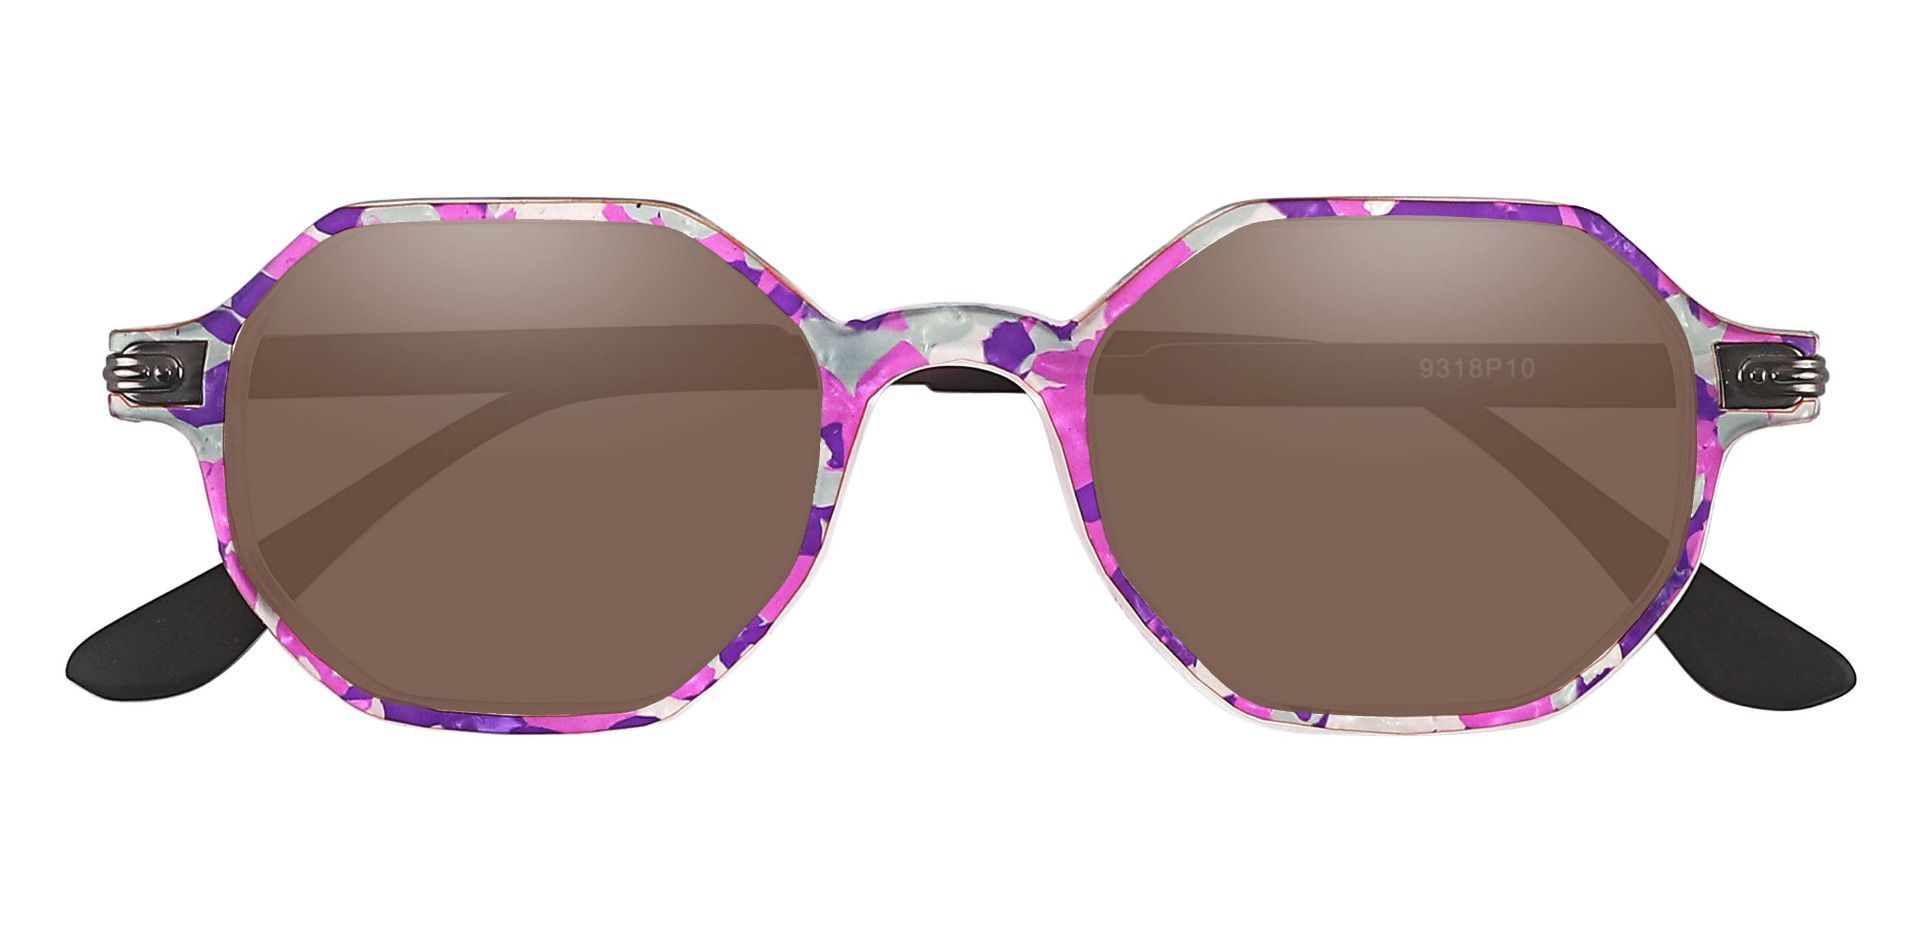 Bogart Geometric Reading Sunglasses - Purple Frame With Brown Lenses